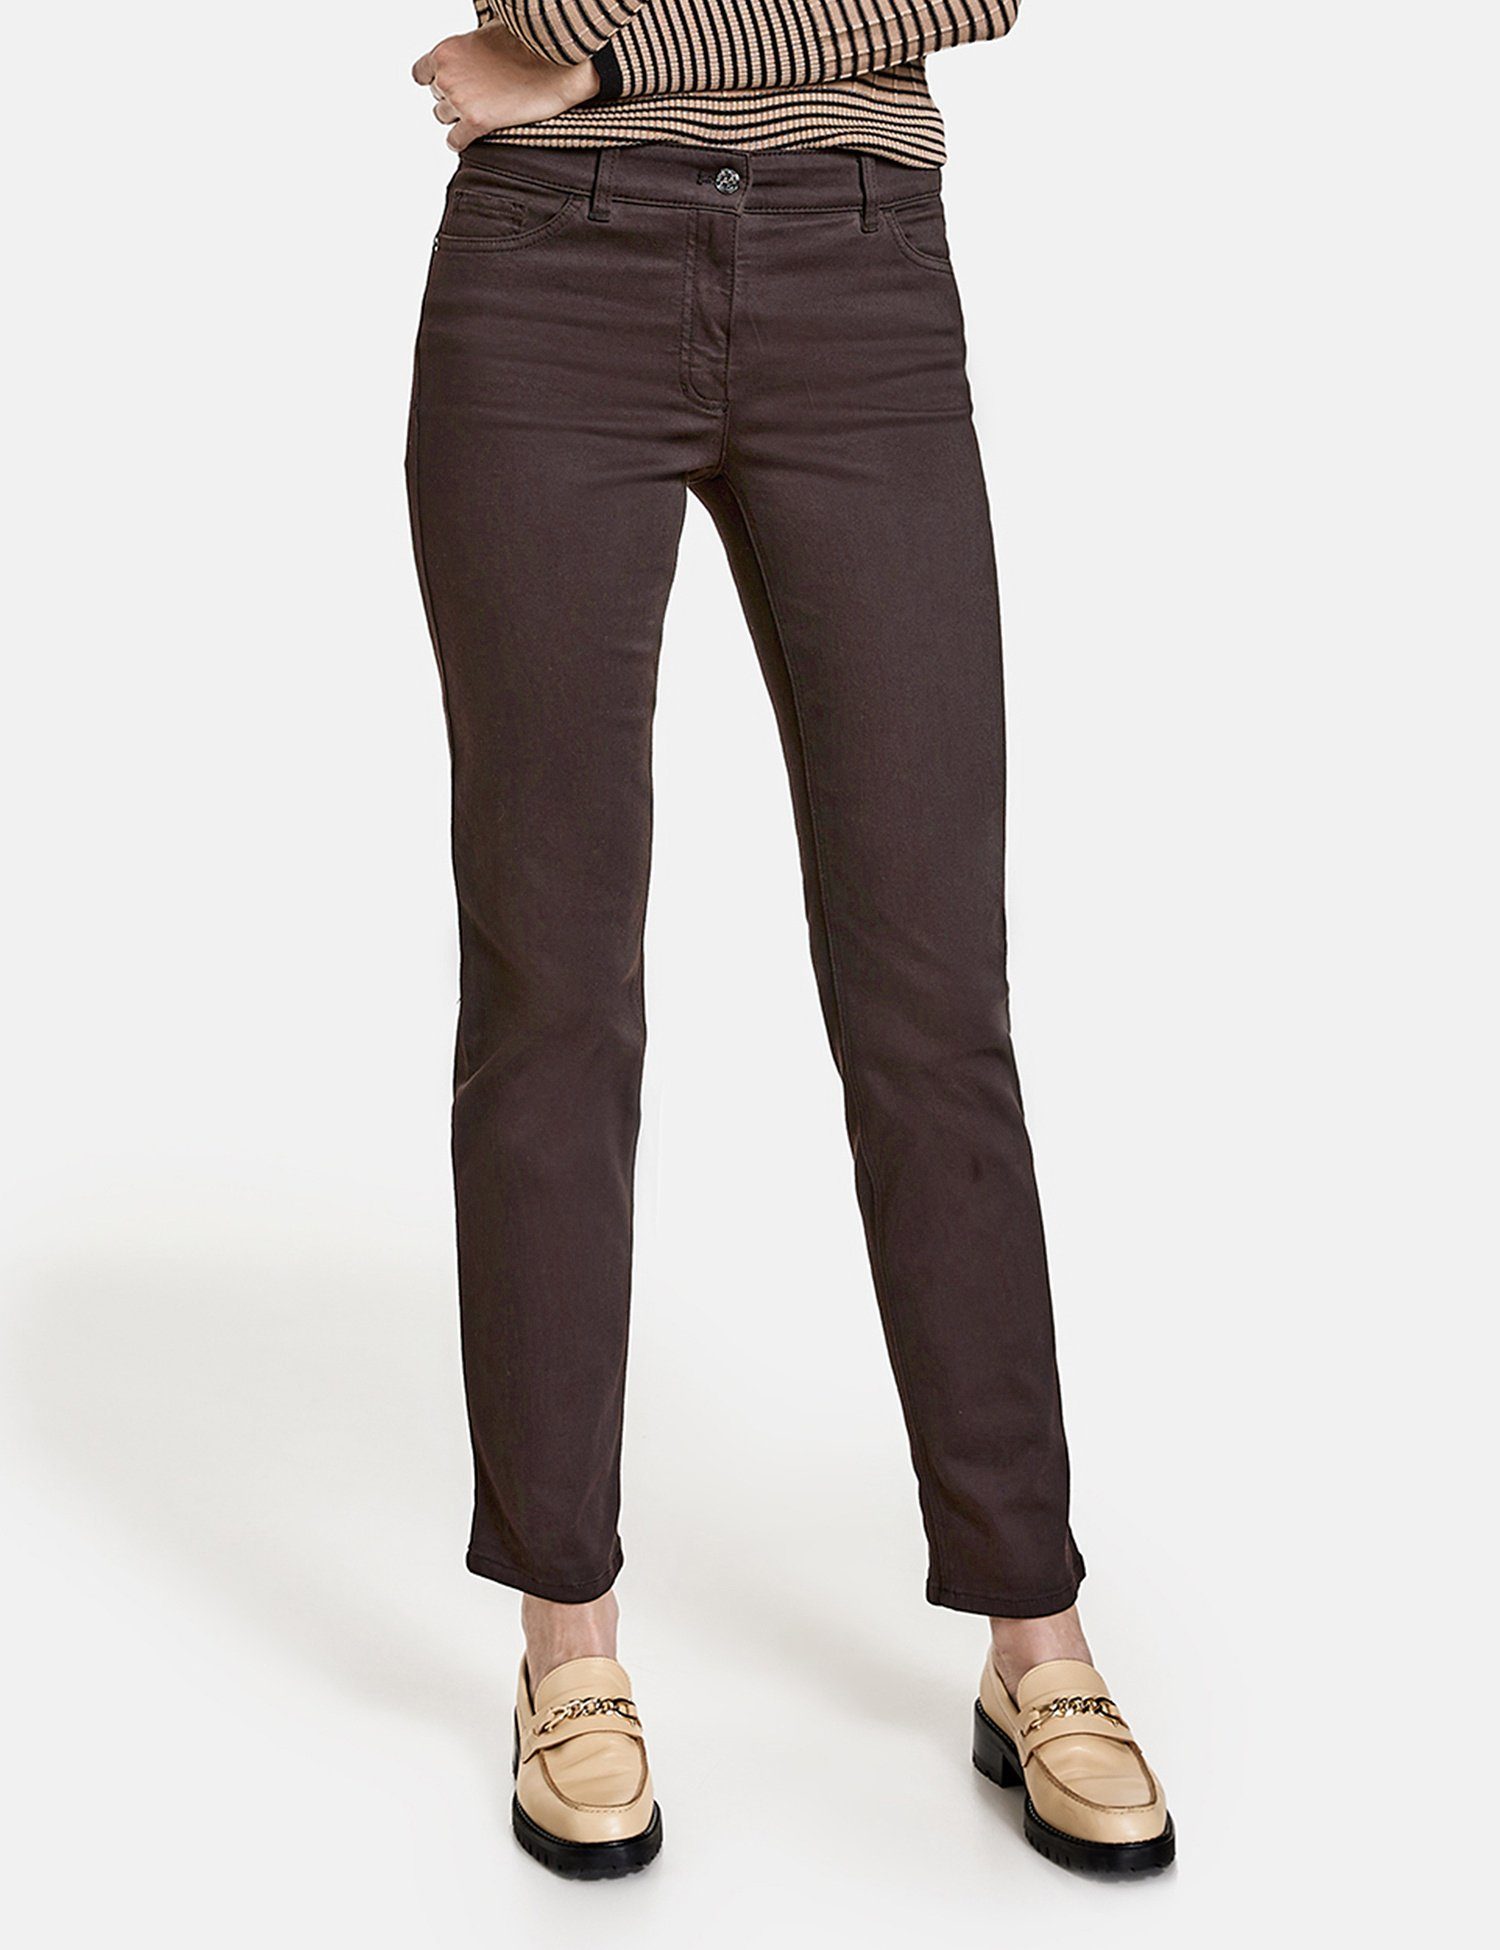 Jeans Straight Kurzgröße Braun WEBER Fit Stretch-Jeans GERRY 5-Pocket